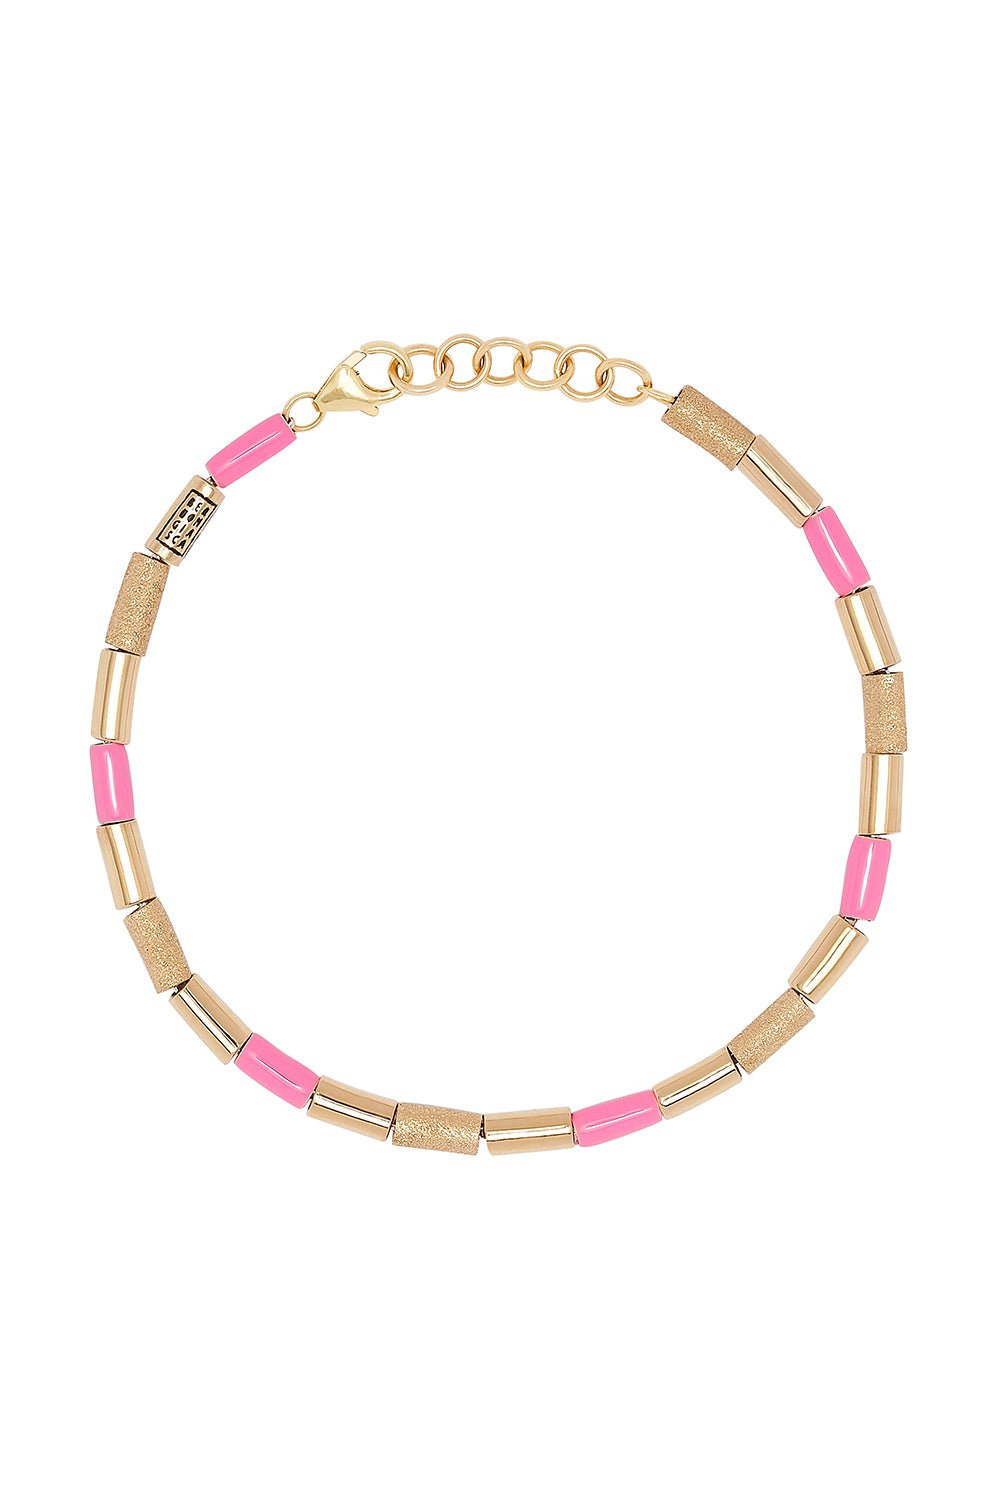 BEA BONGIASCA-Pink Tubini Bracelet-YELLOW GOLD